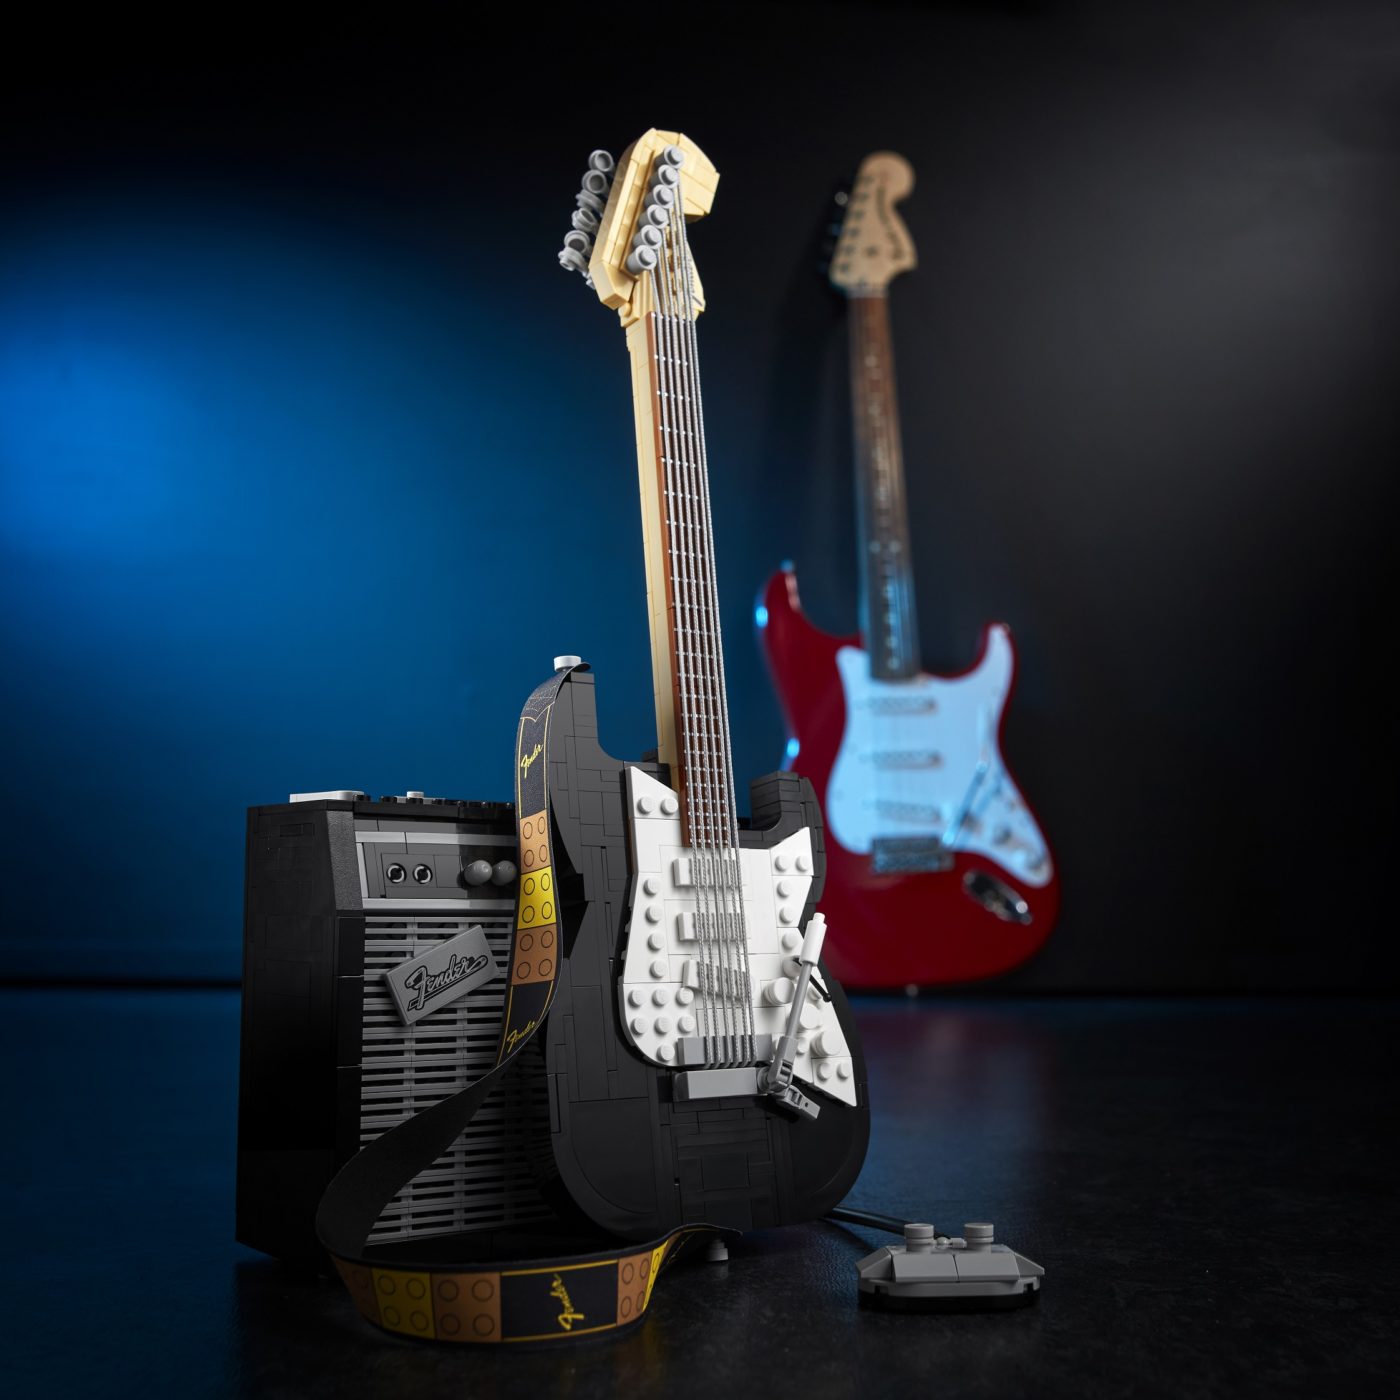 LEGO 21329 Ideas Fender Stratocaster Promotional Image